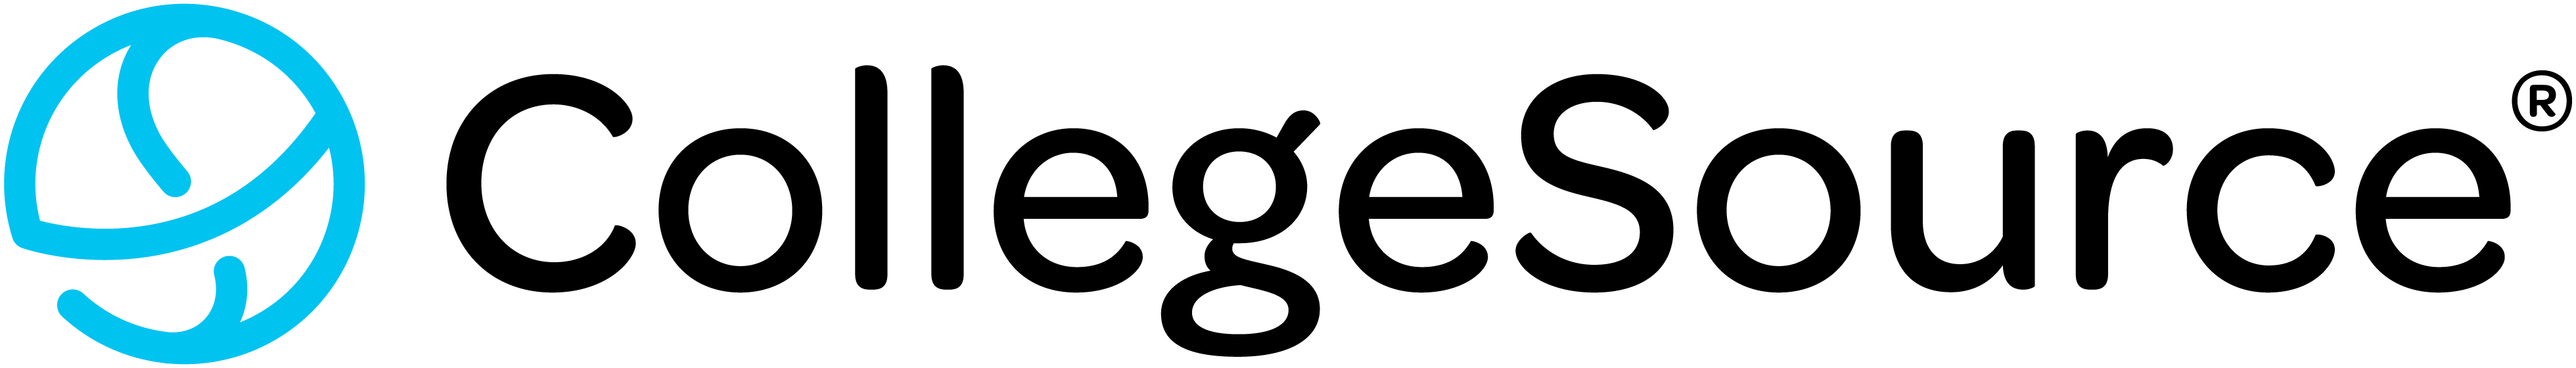 CollegeSource, Inc. Company Logo